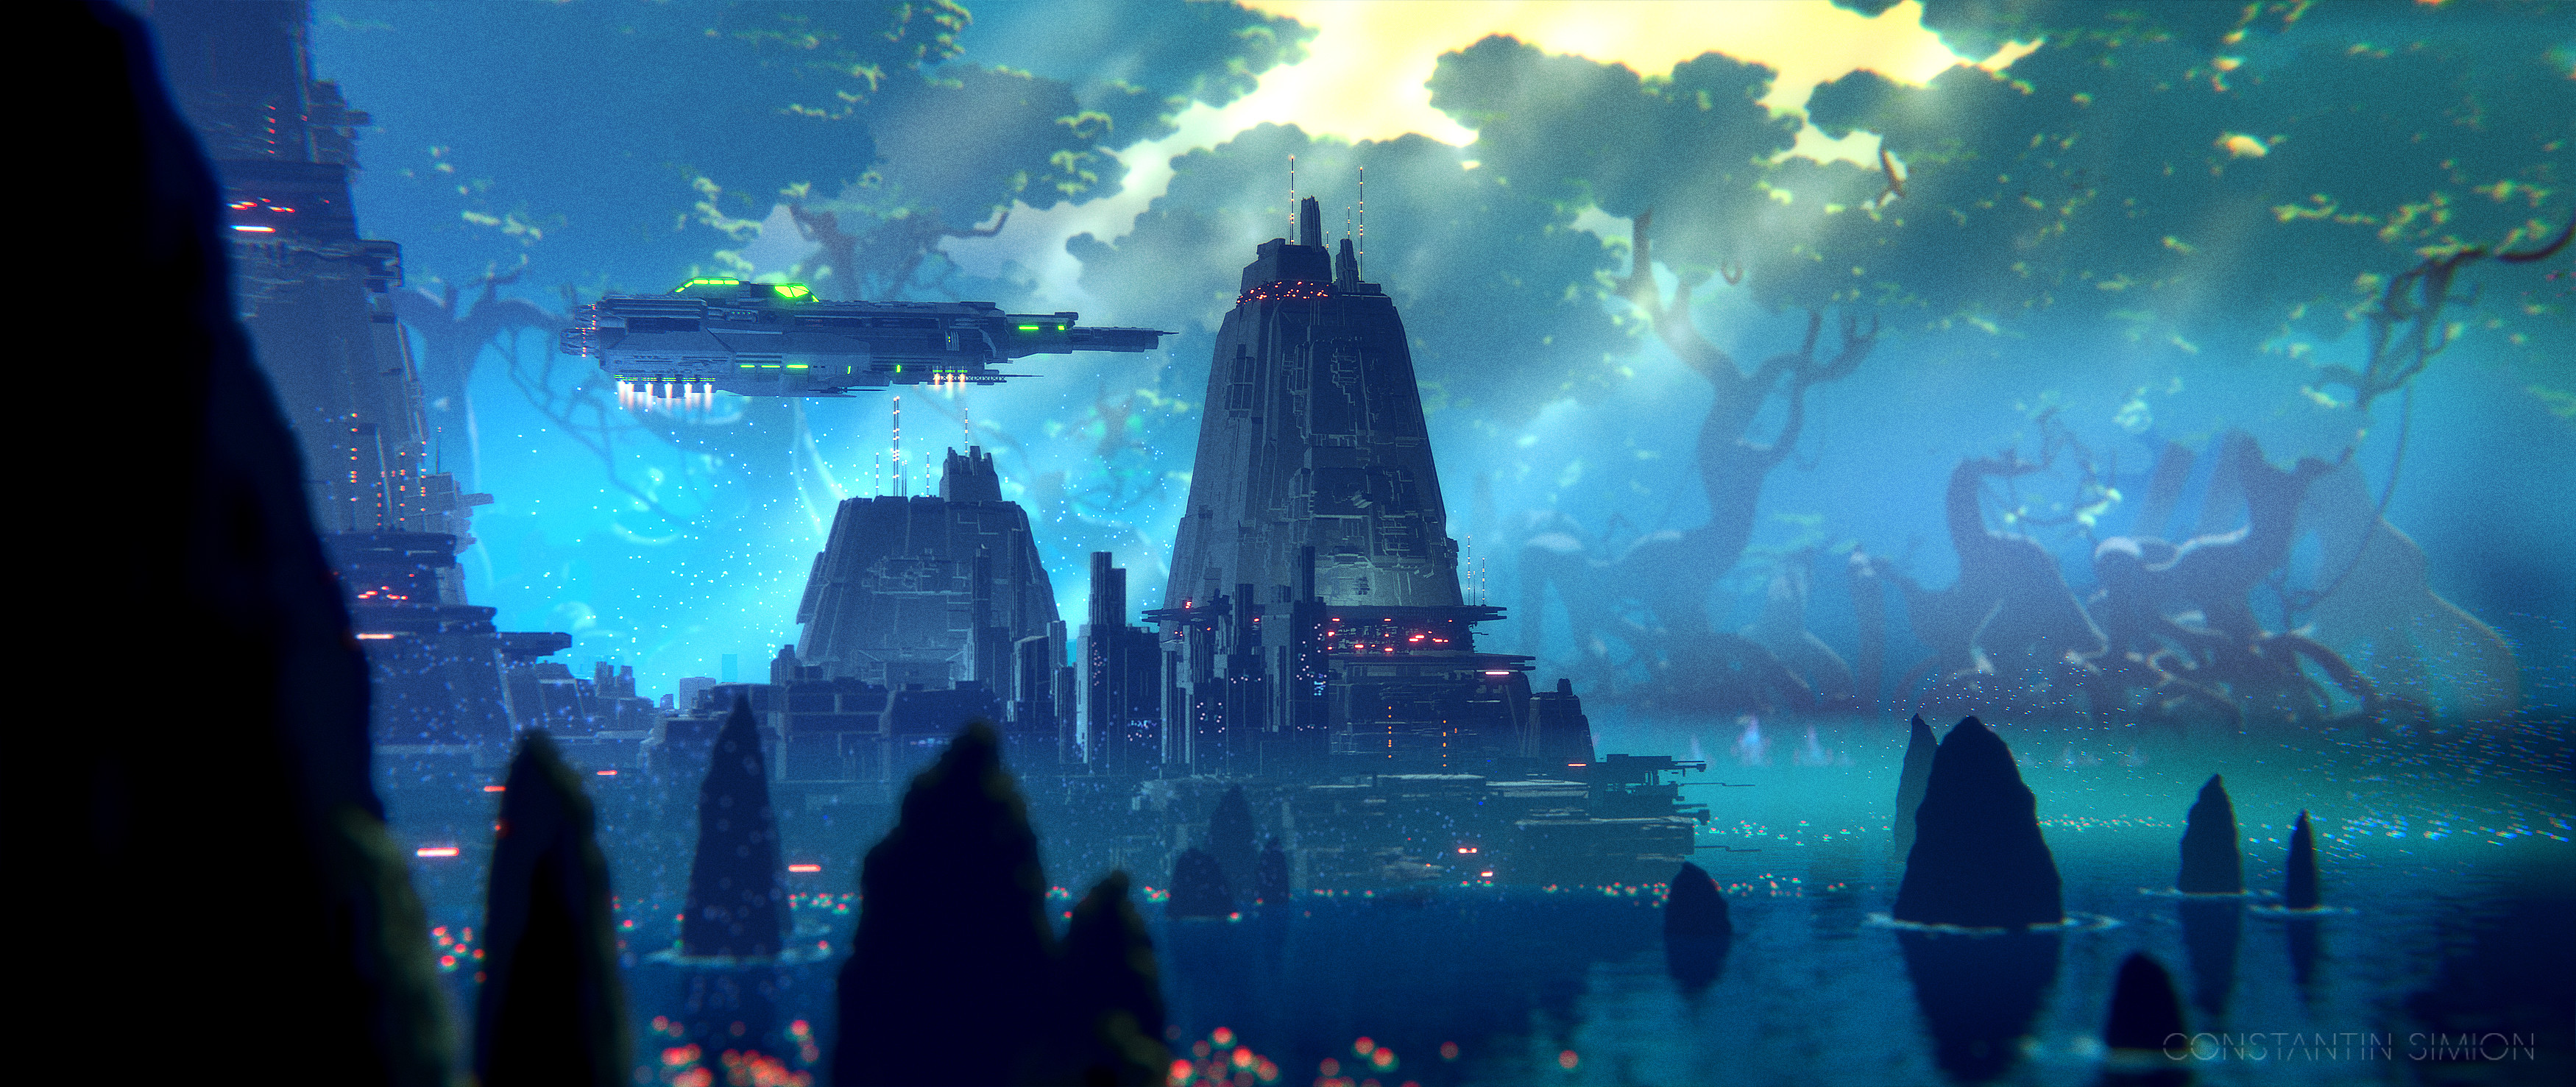 Cyberpunk Ultrawide Futuristic Future Forest City Spaceship Technology Science Fiction Artwork Digit 3500x1477